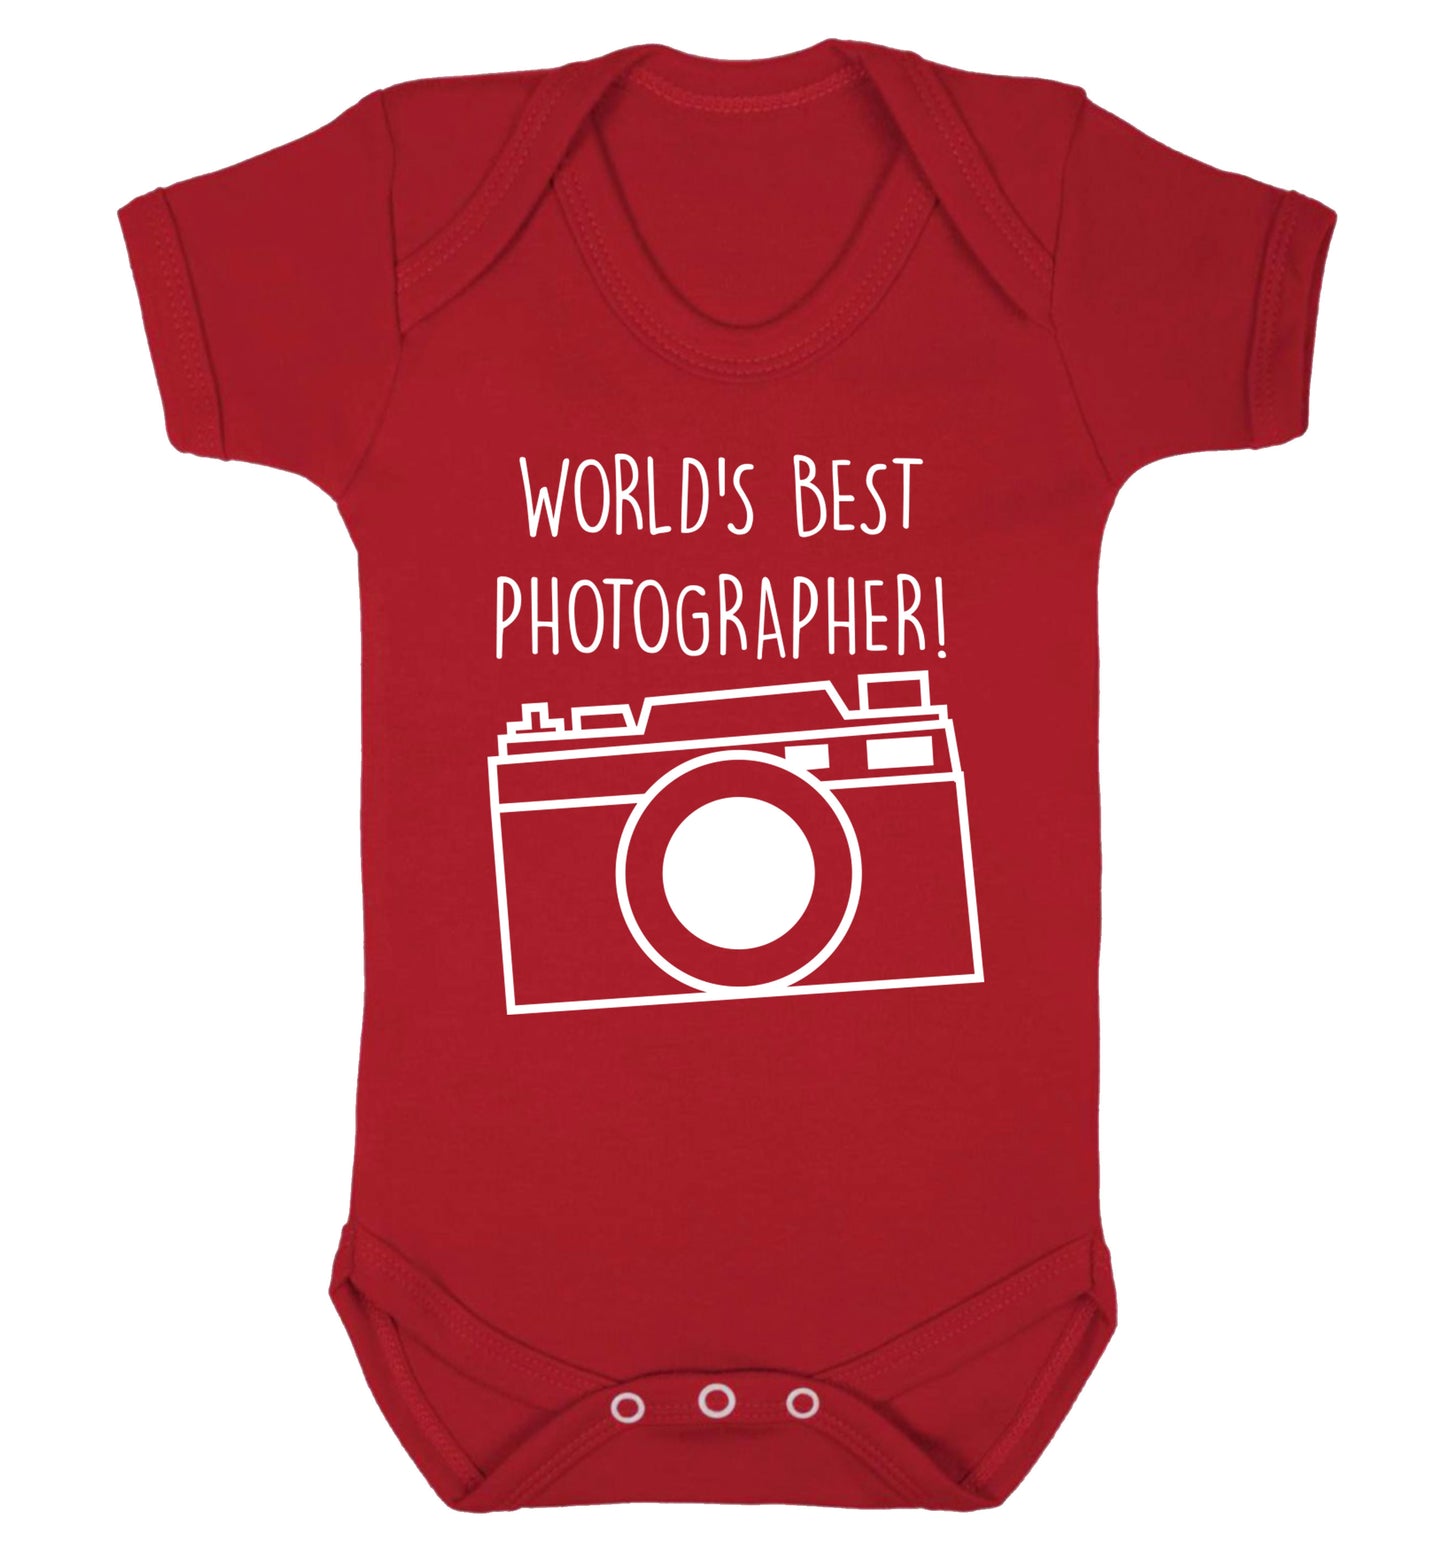 Worlds best photographer  Baby Vest red 18-24 months